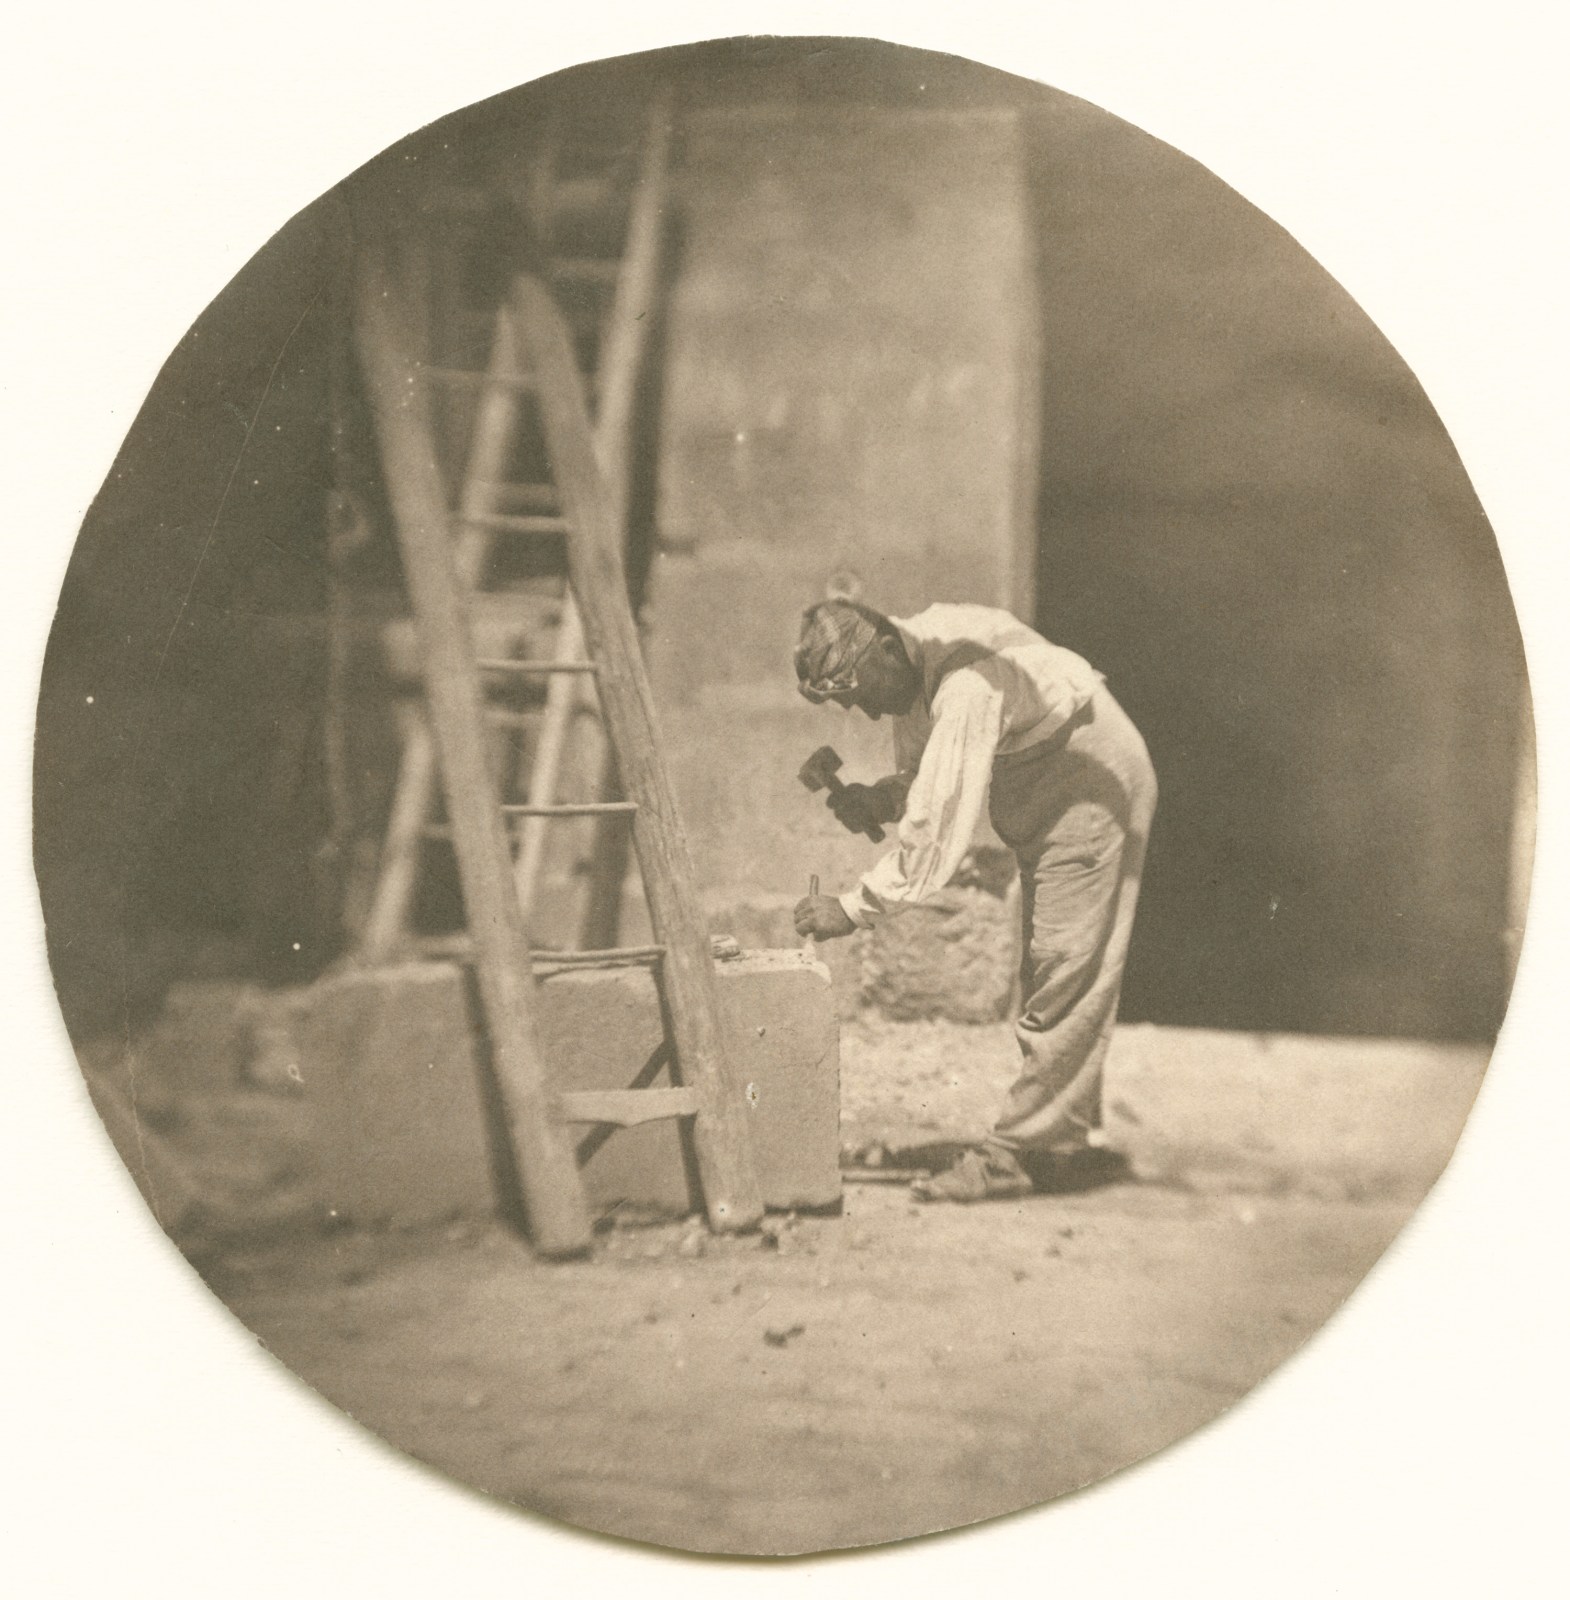 Charles NÈGRE (French, 1820-1880) Le tailleur de pierre, summer 1853 Salt print from a collodion on glass negative 9.9 cm tondo